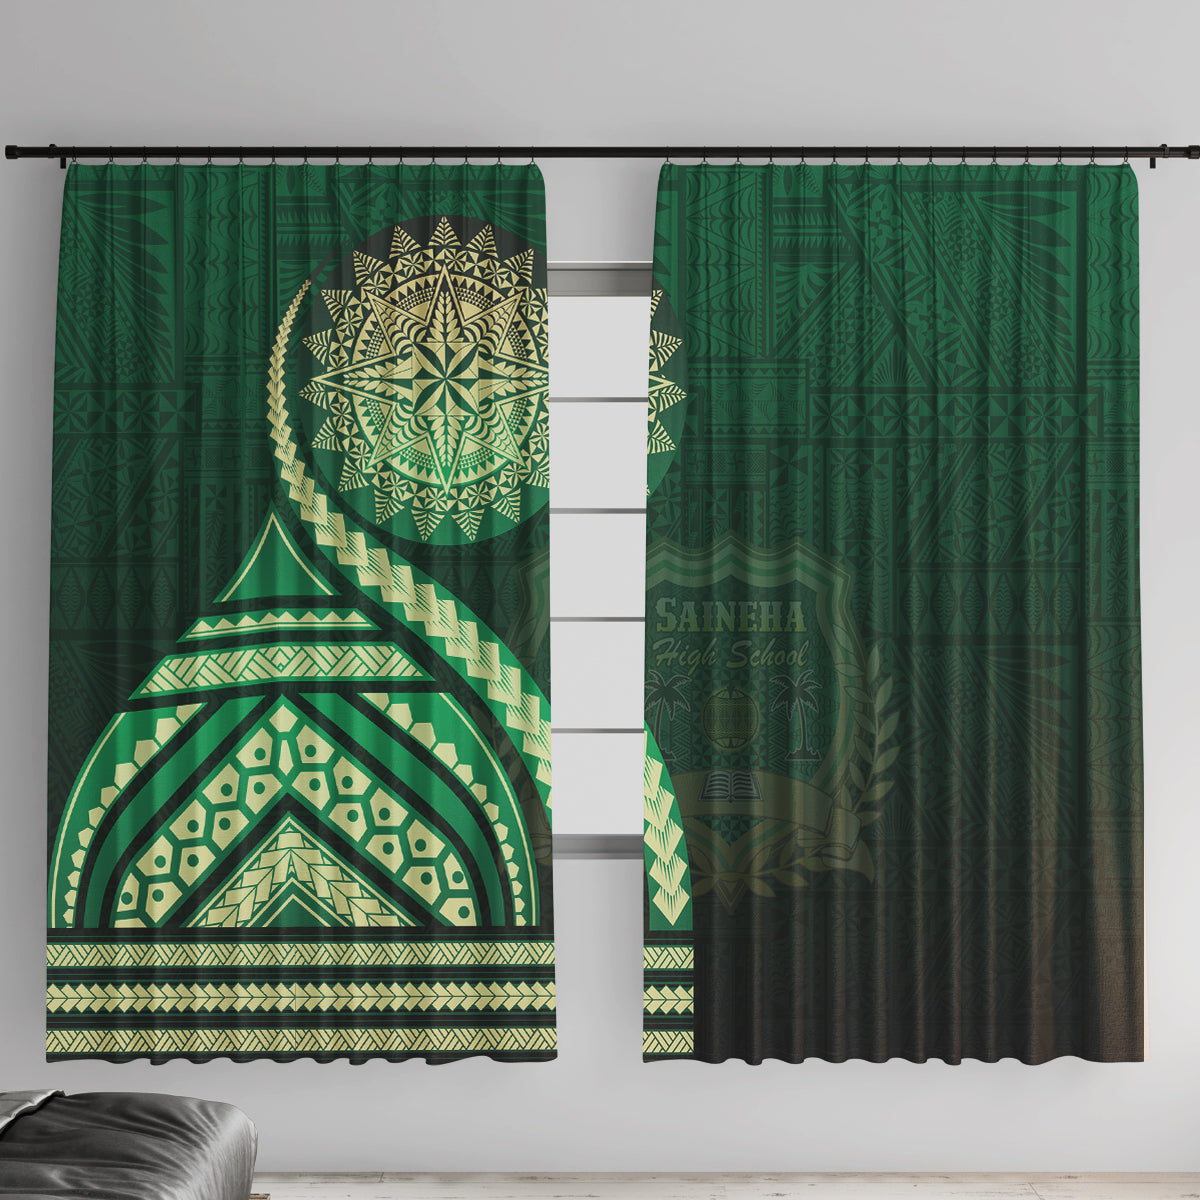 Saineha High School Window Curtain Ngatu and Polynesian Pattern